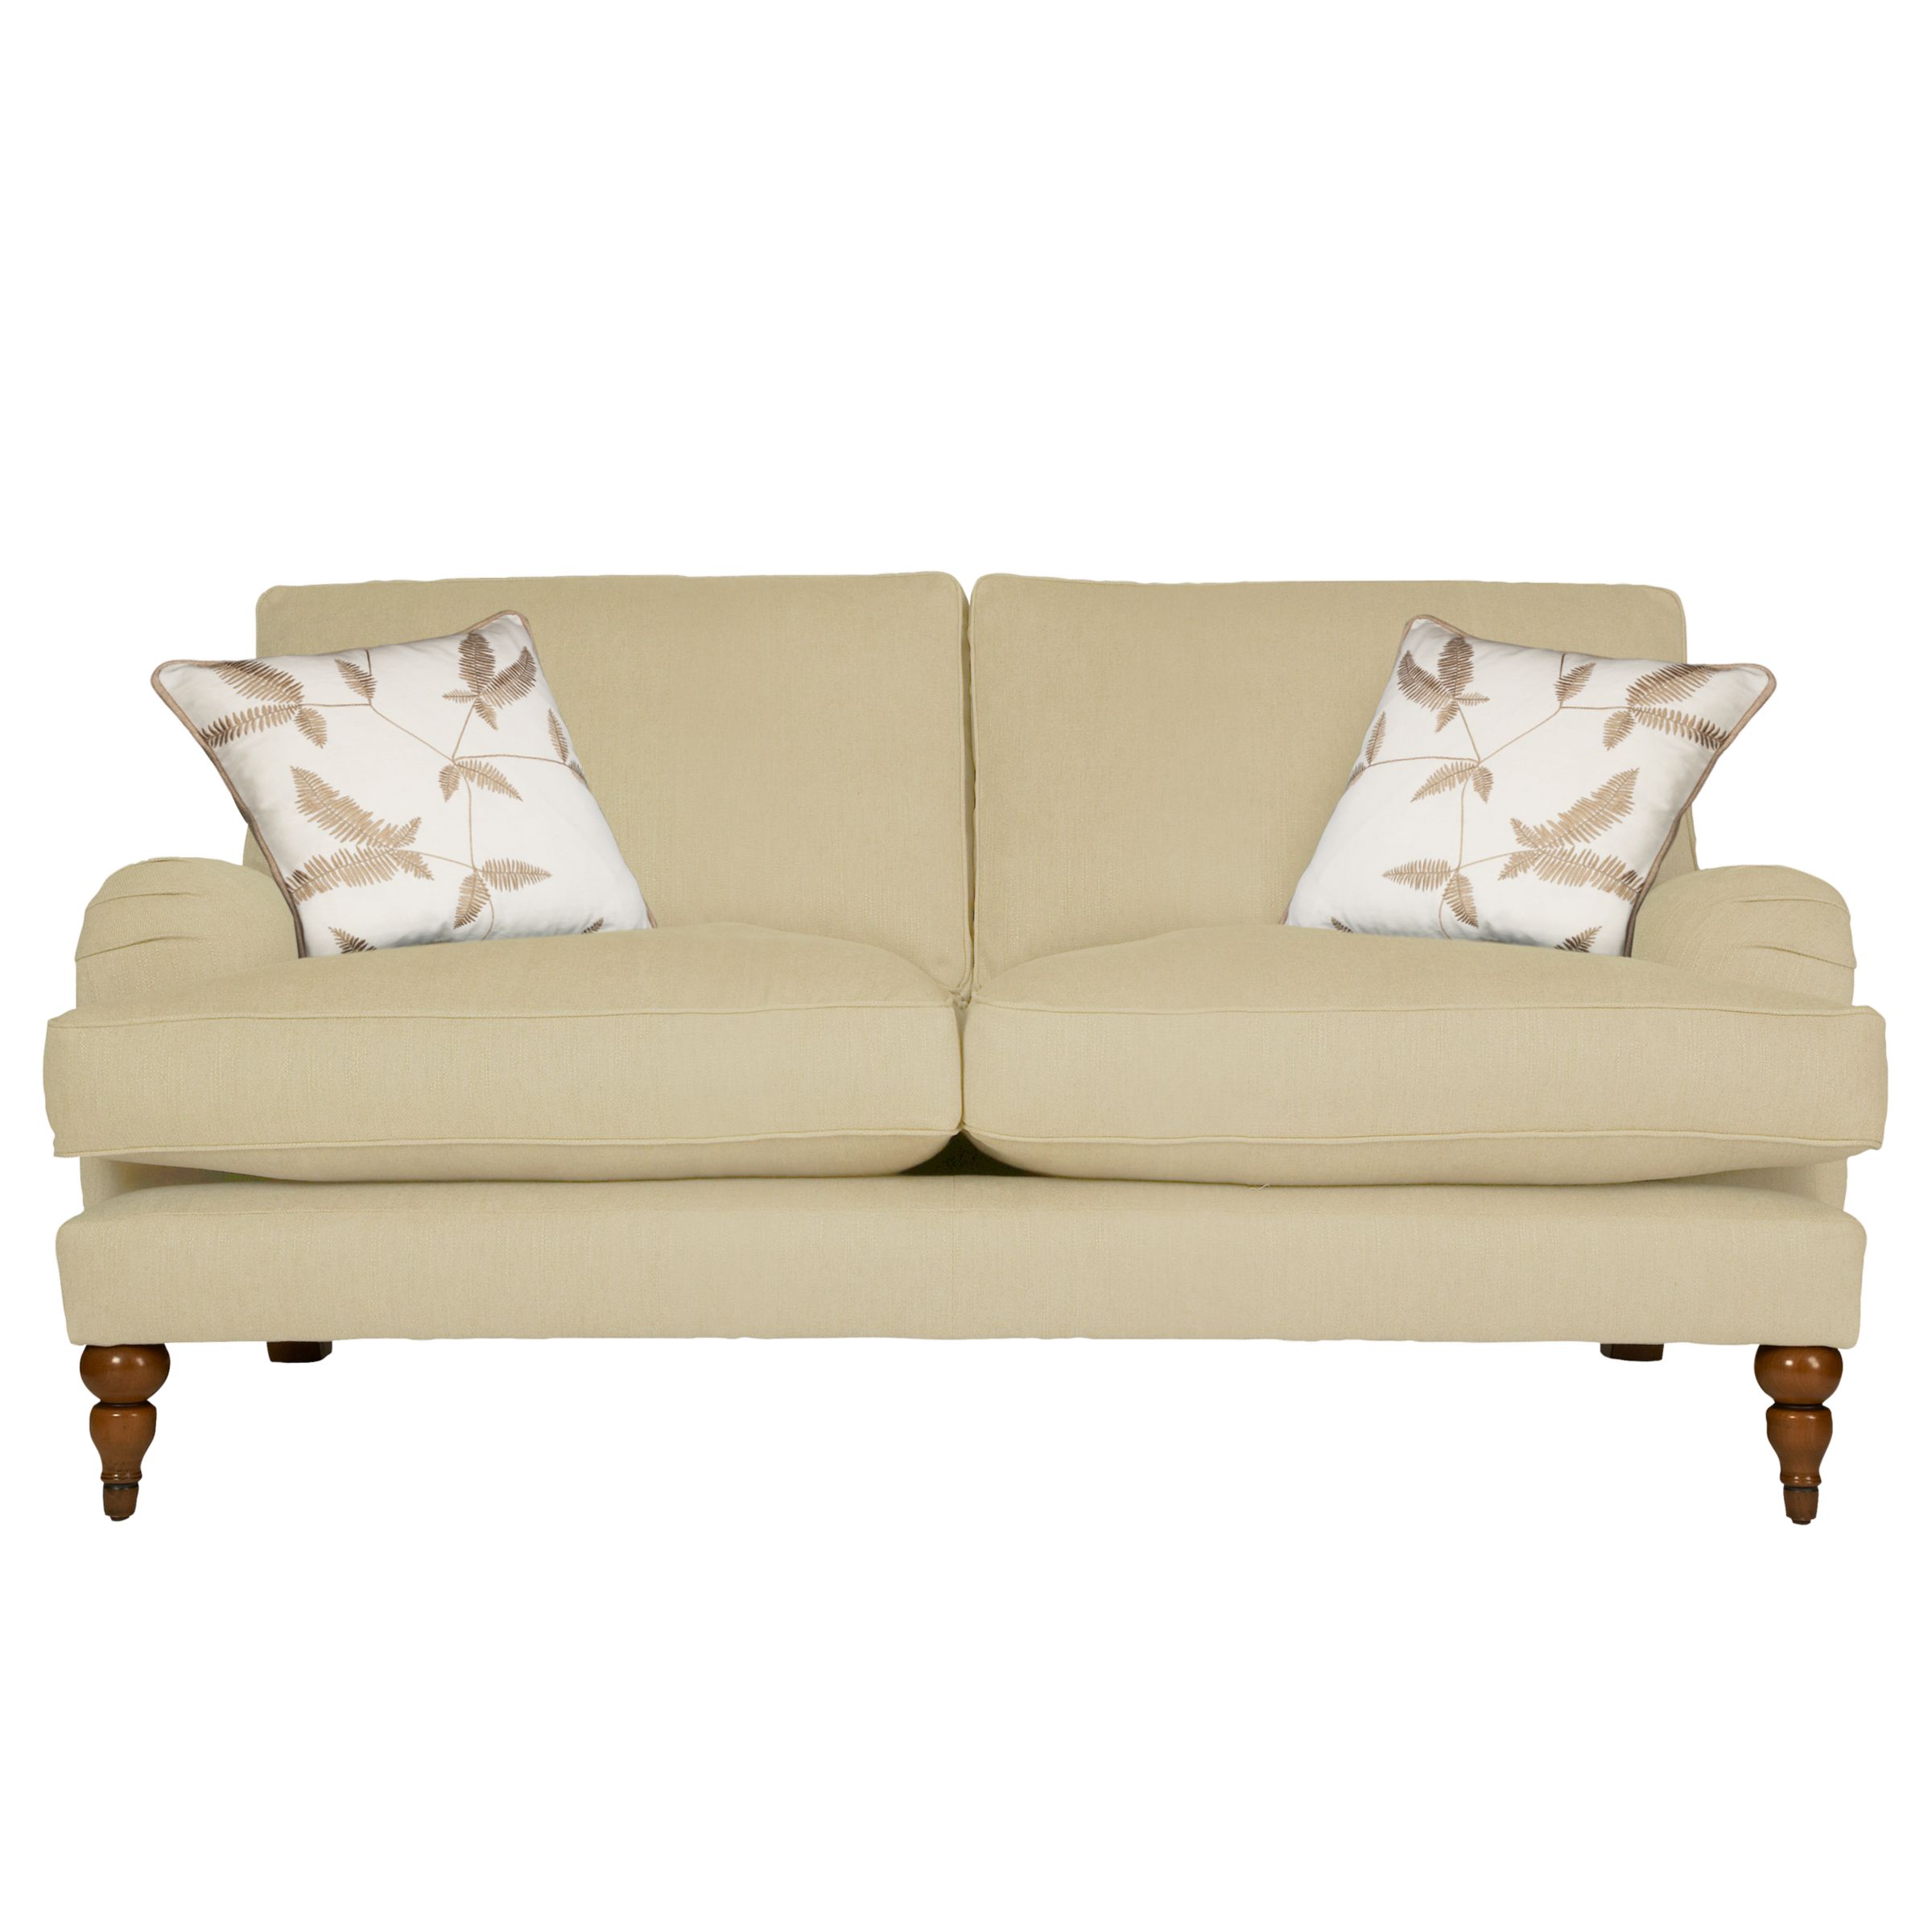 John Lewis Penryn Small Sofa, Beige / Elna, width 156cm